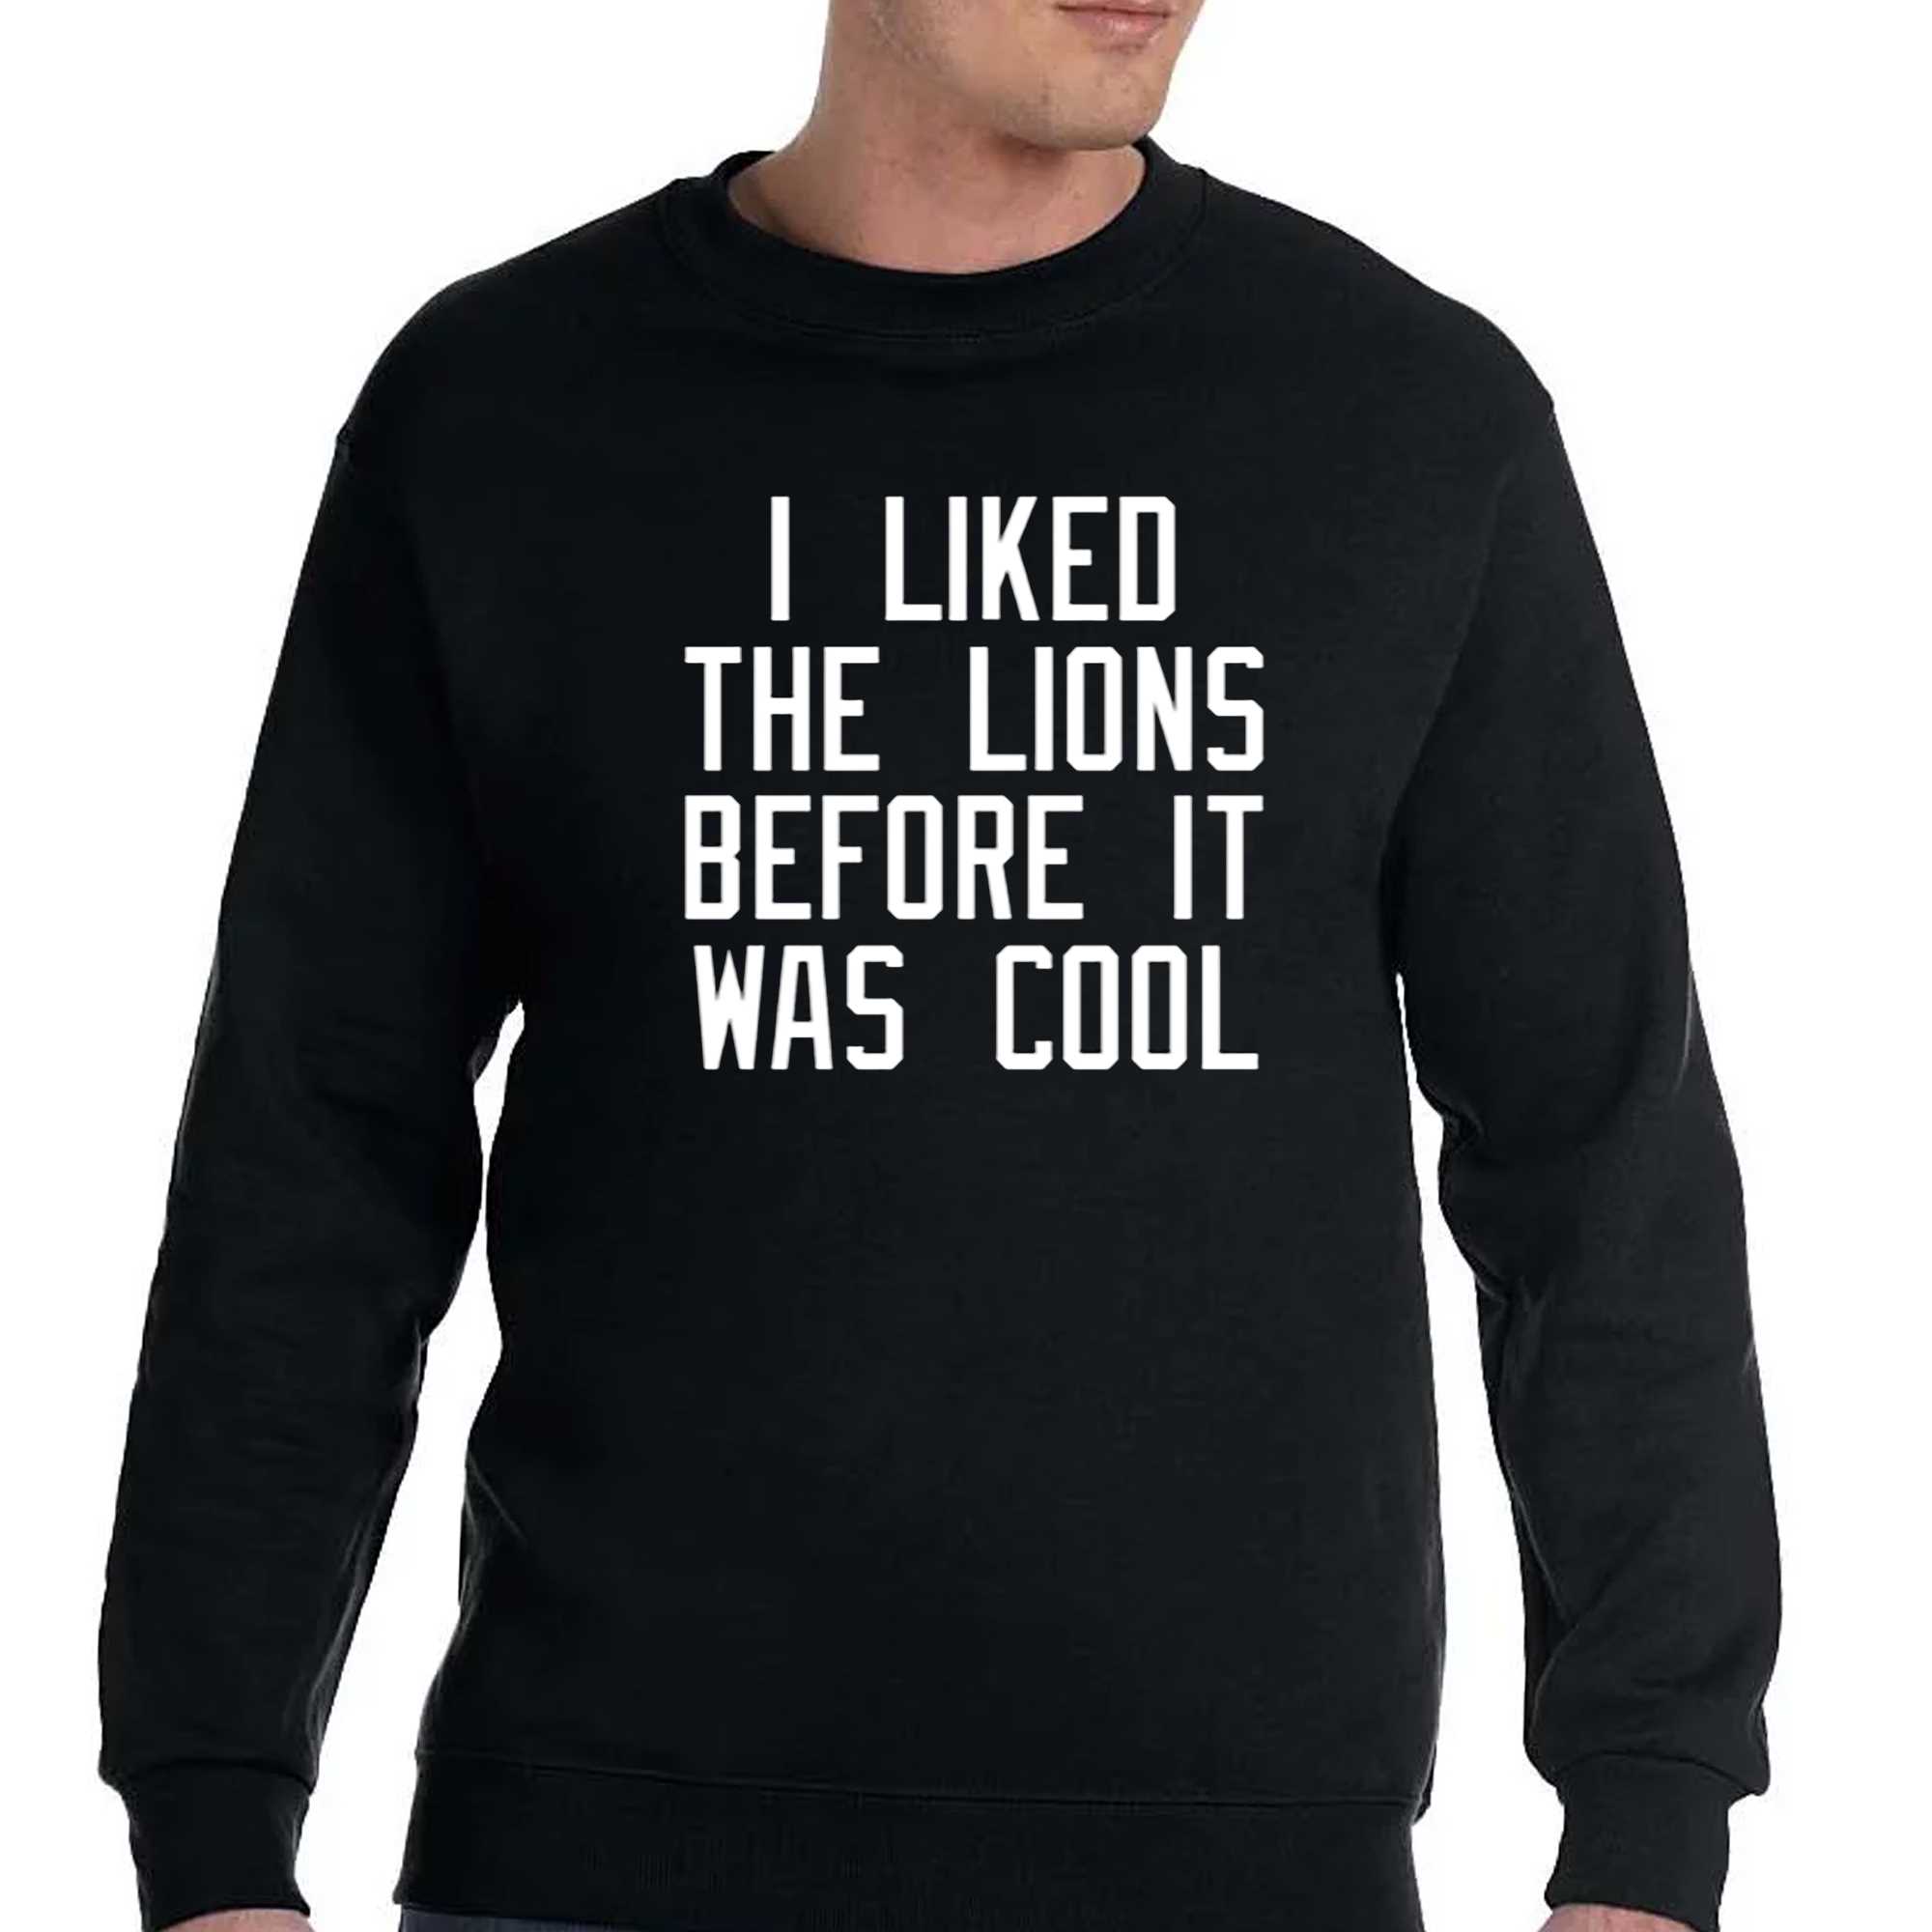 Eminem Detroit Lions Shirt, hoodie, longsleeve, sweater